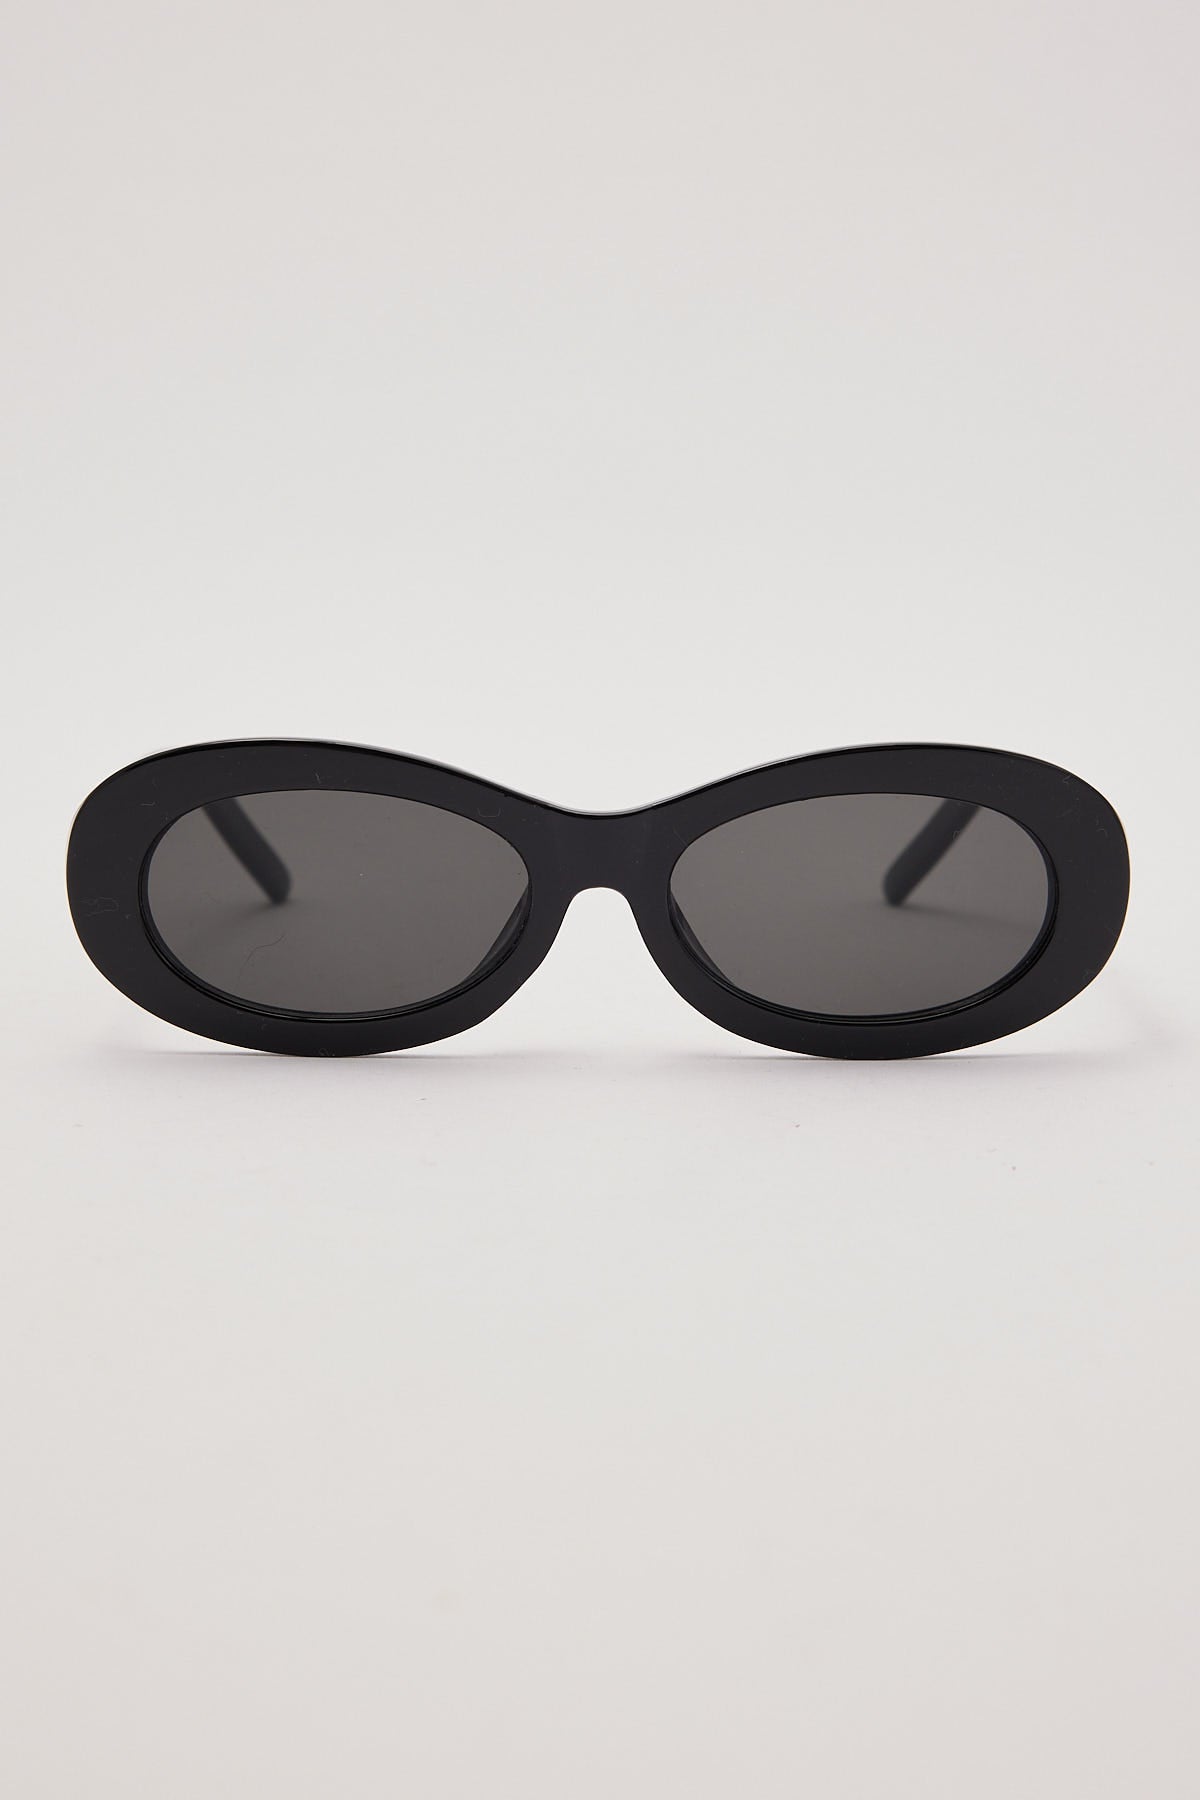 Angels Whisper Rami Sunglasses Black – Universal Store